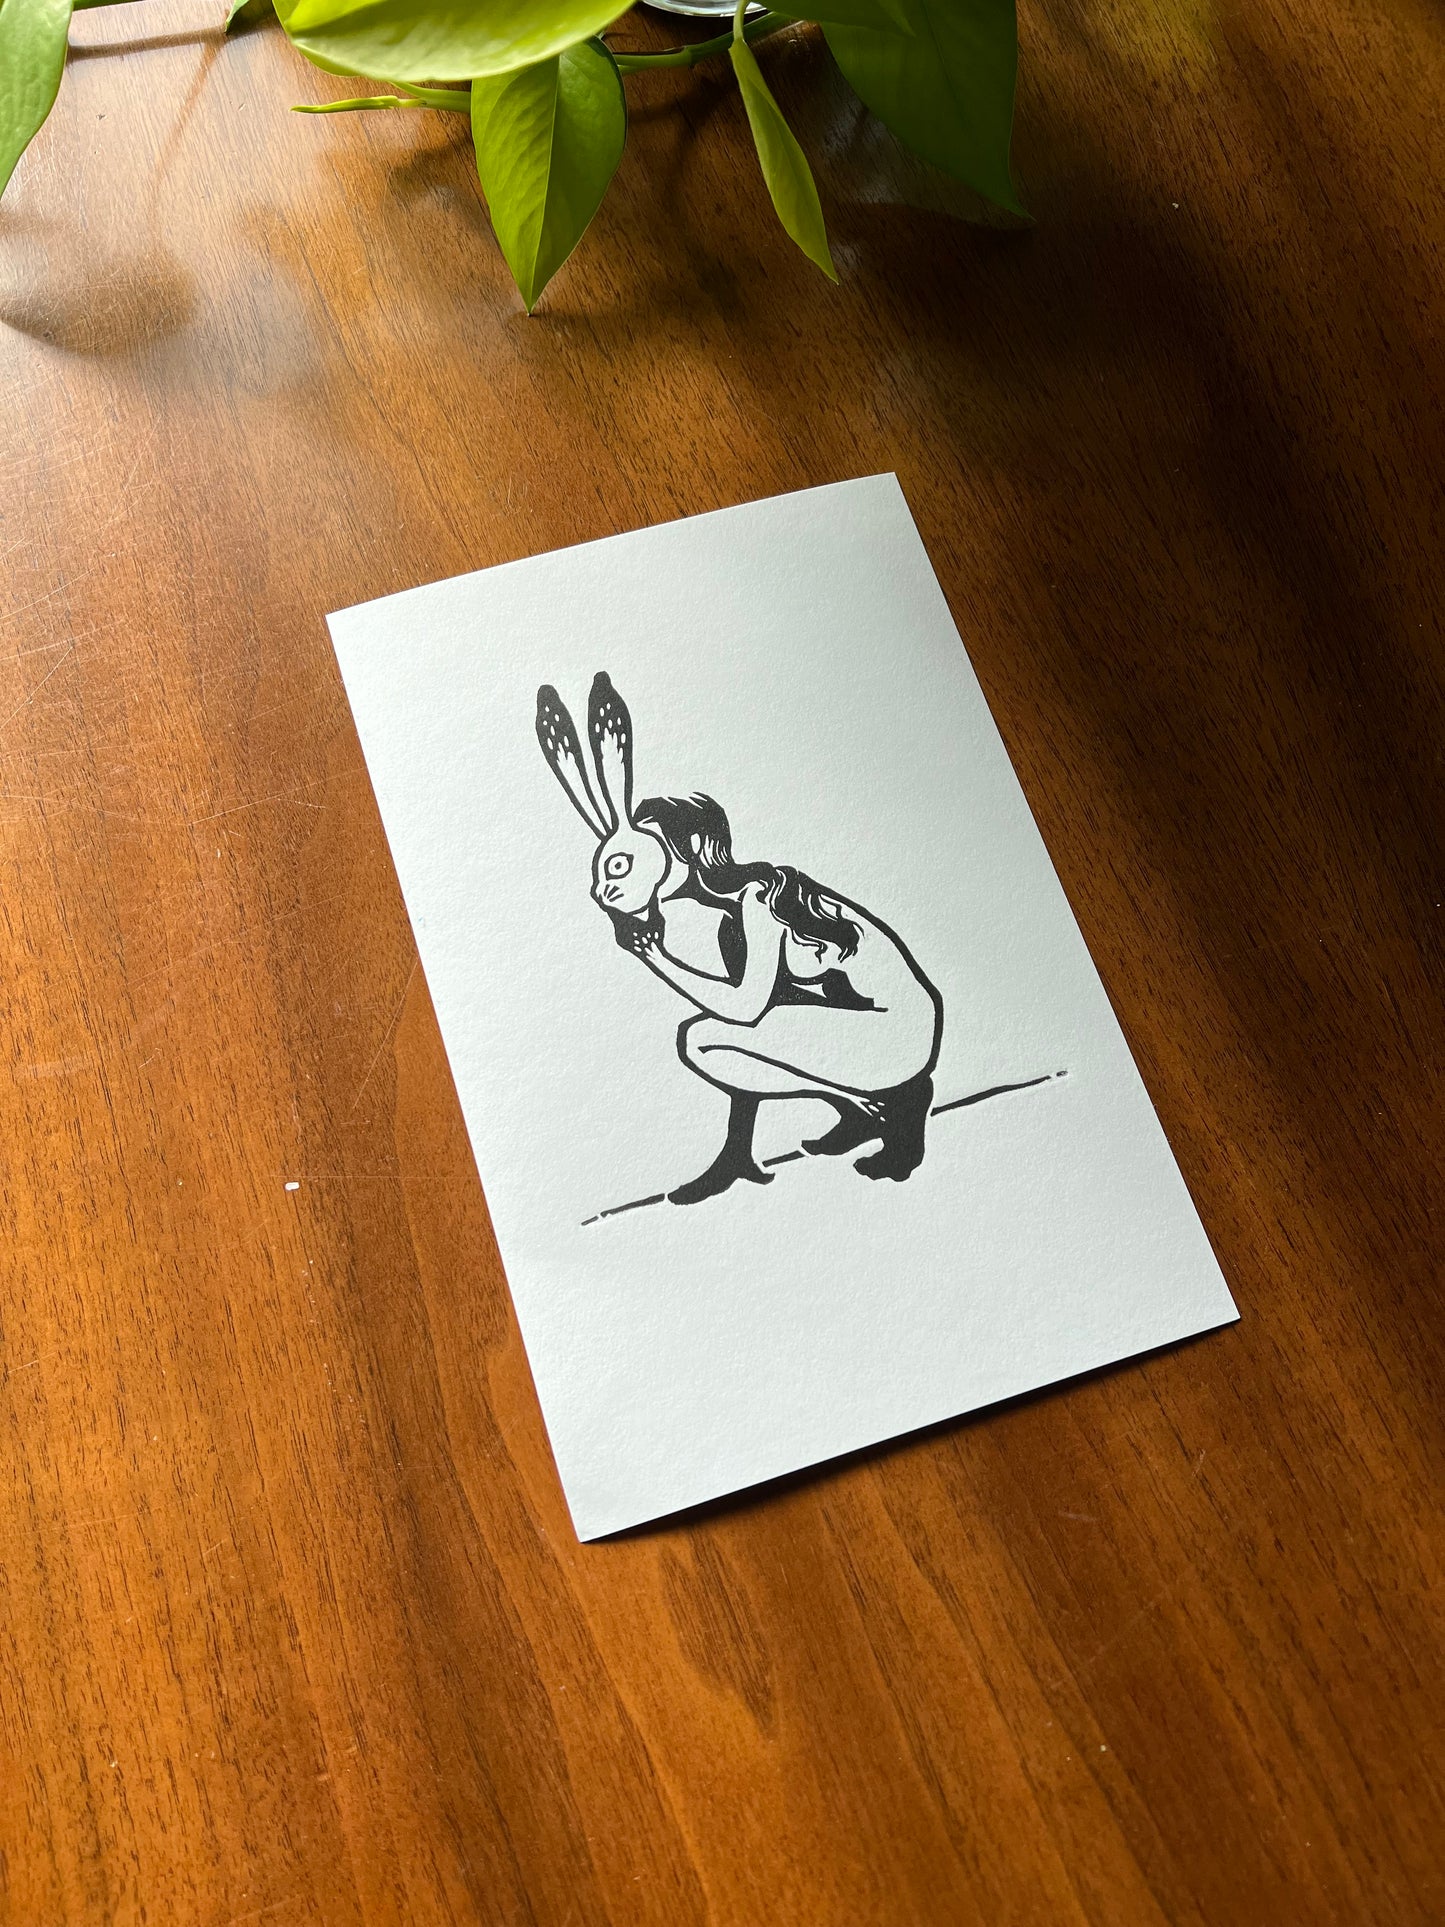 Year of the Rabbit - Handprinted Linocut